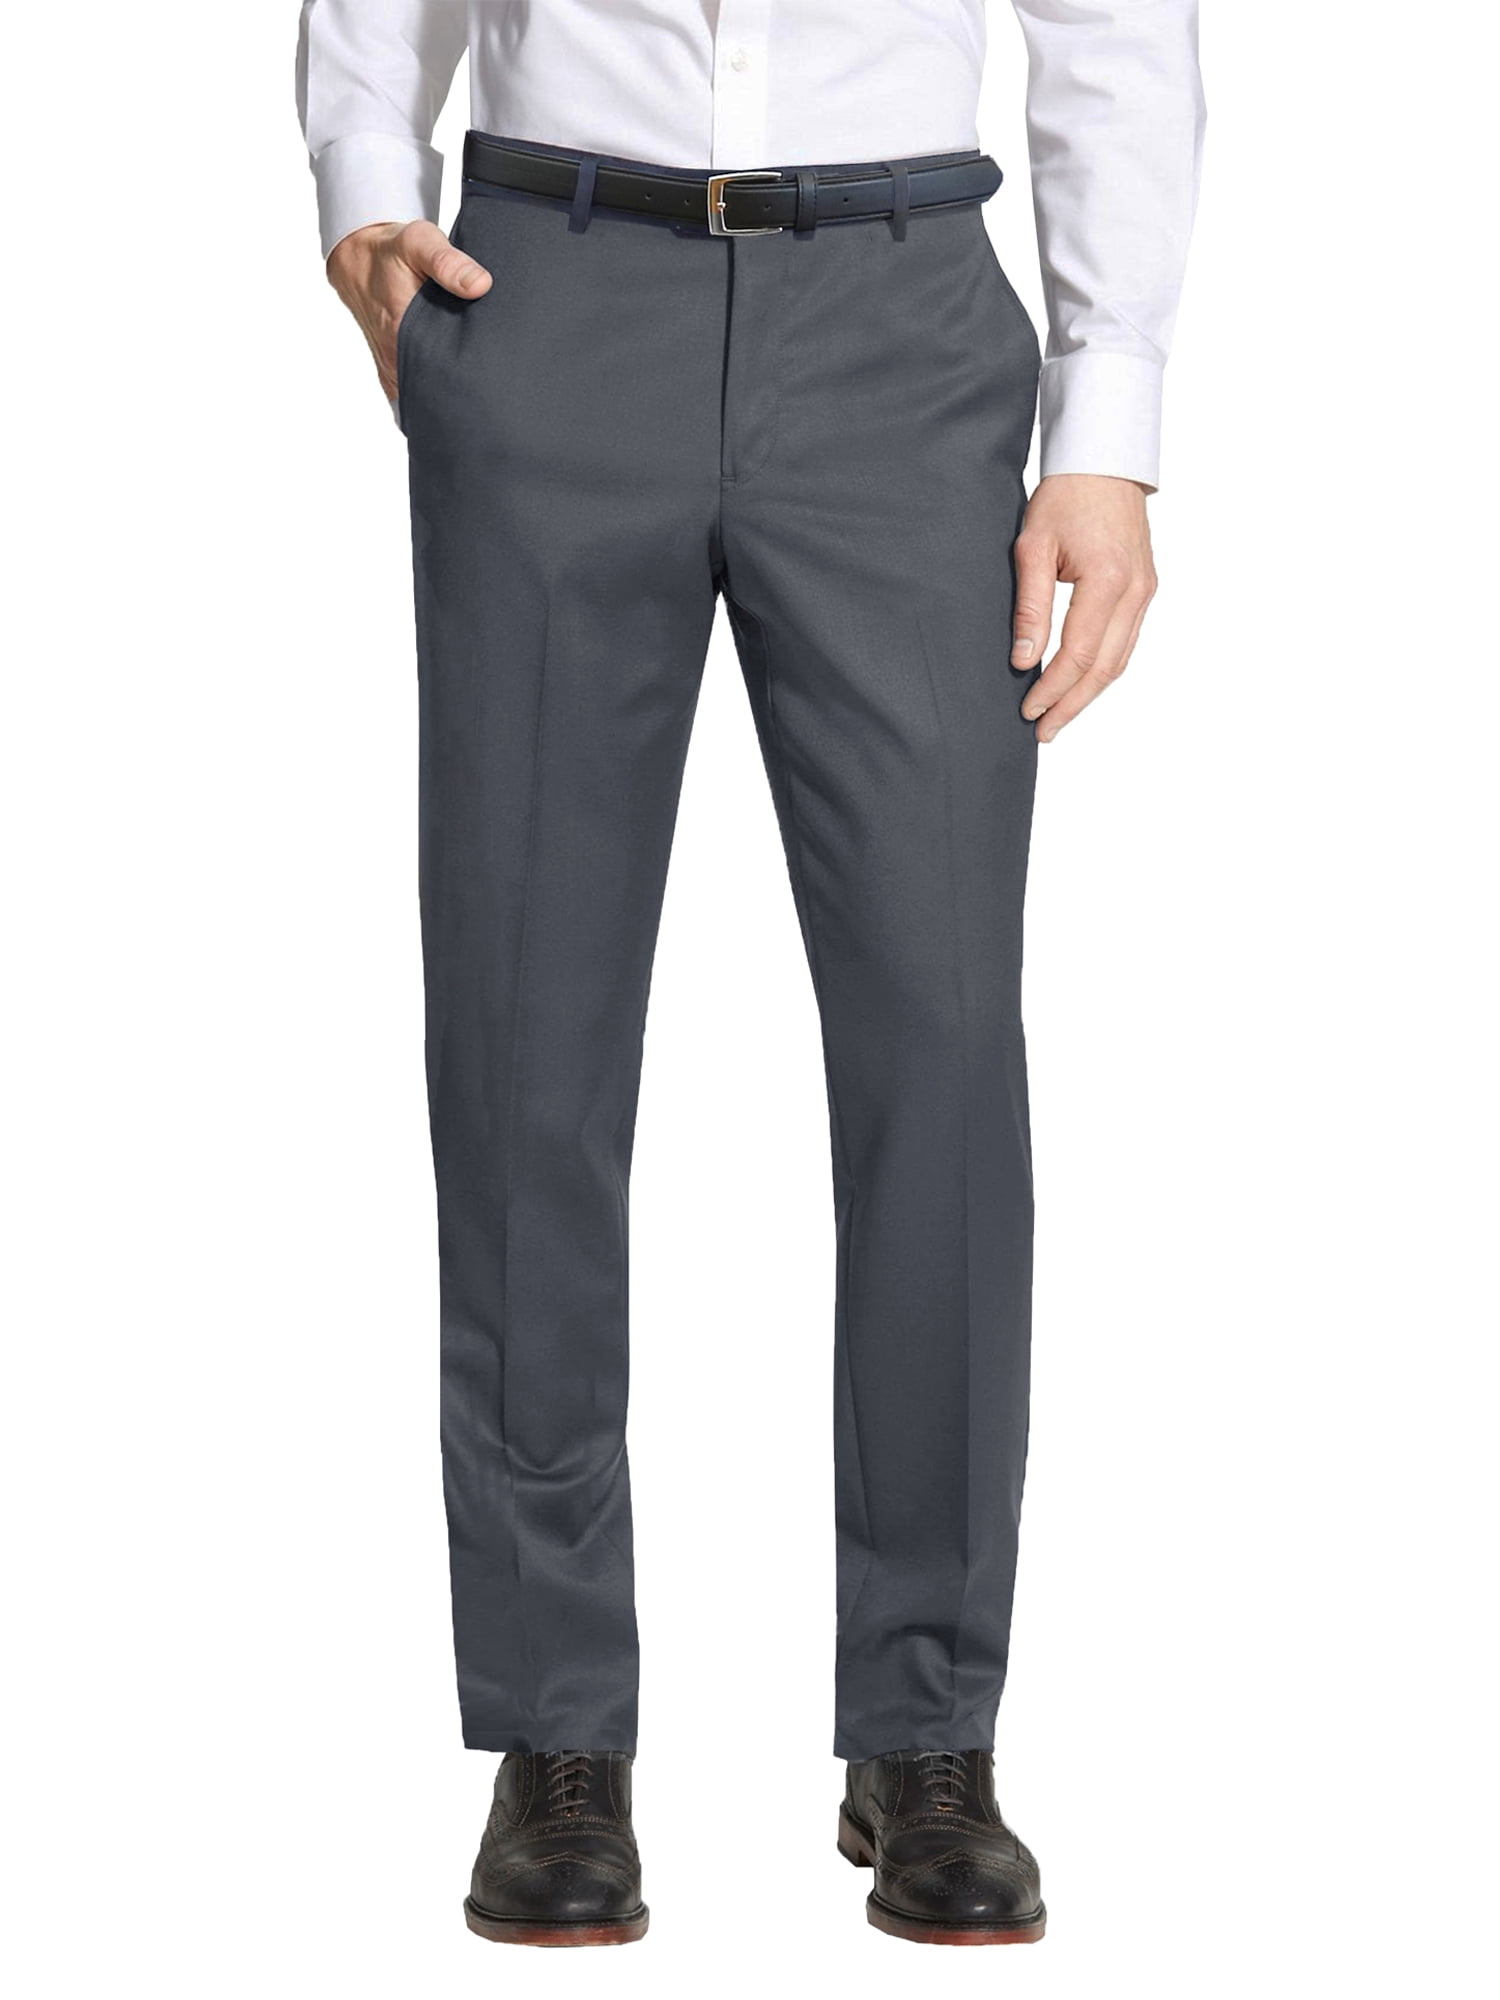 GBH Men's Slim-Fit Belted Casual Dress Pants - Walmart.com